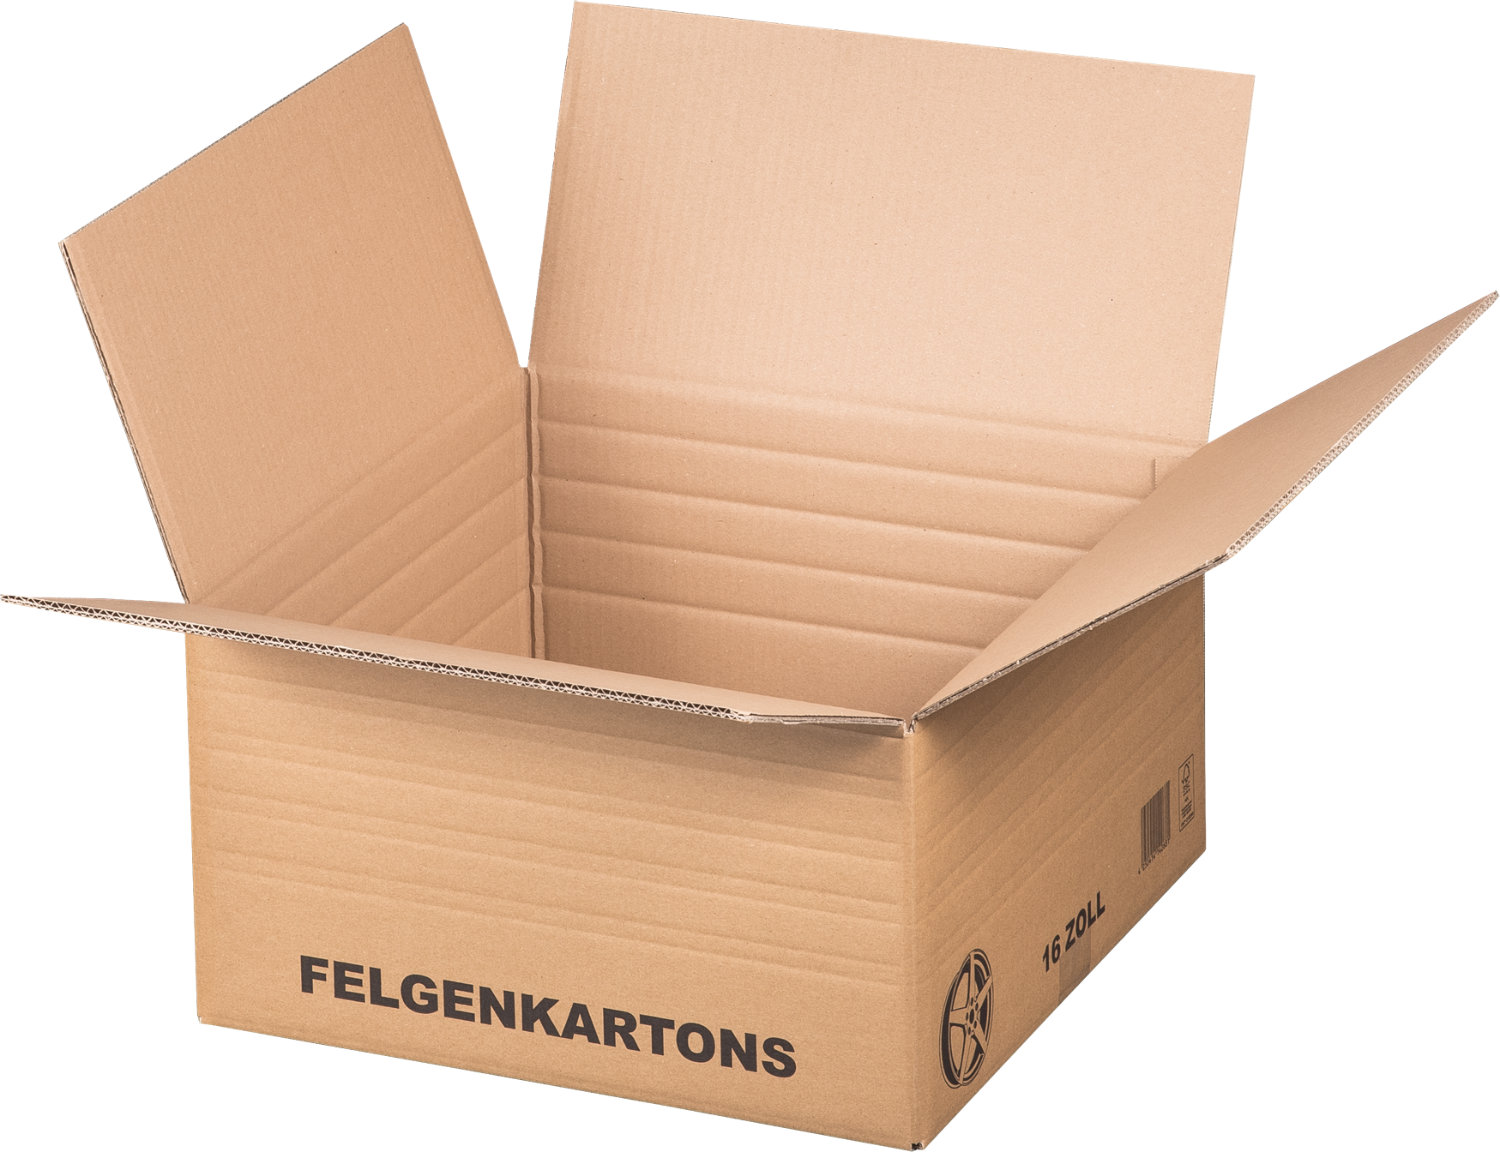  Smartbox Pro Felgenkarton 525 x 525 x 310 mm 